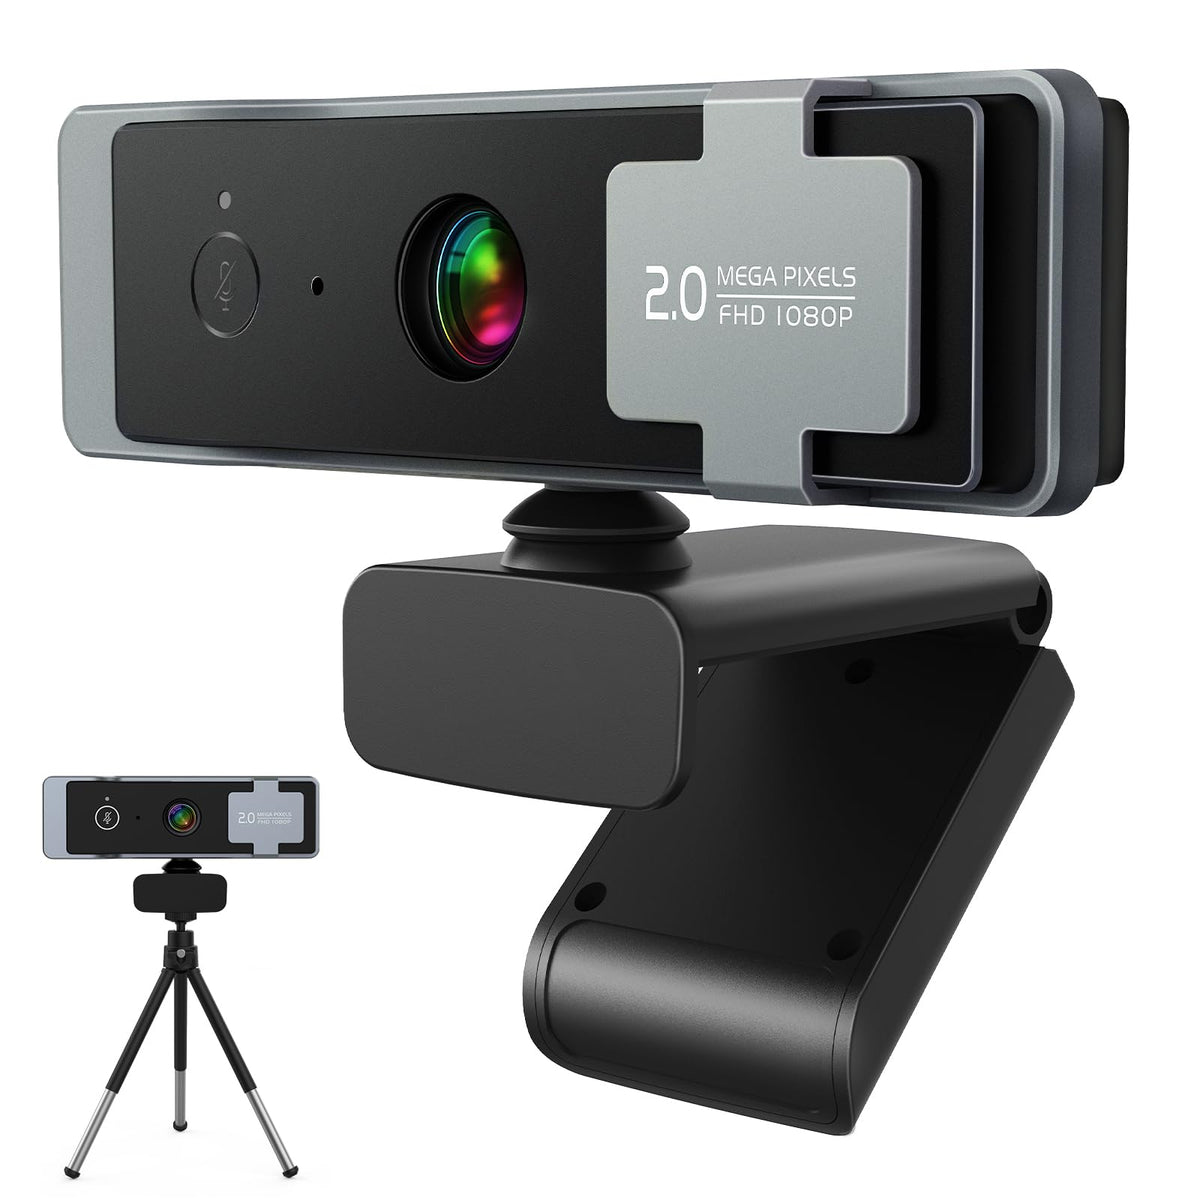 Paobas C920 1080P Webcam with Privacy Cover and Tripod Stand - 90ÃƒÆ’Ã¢â‚¬Å¡Ãƒâ€šÃ‚Â° View USB Computer Camera with 2 Noise Reduction Mics - Plug & Play for Laptop and Desktop